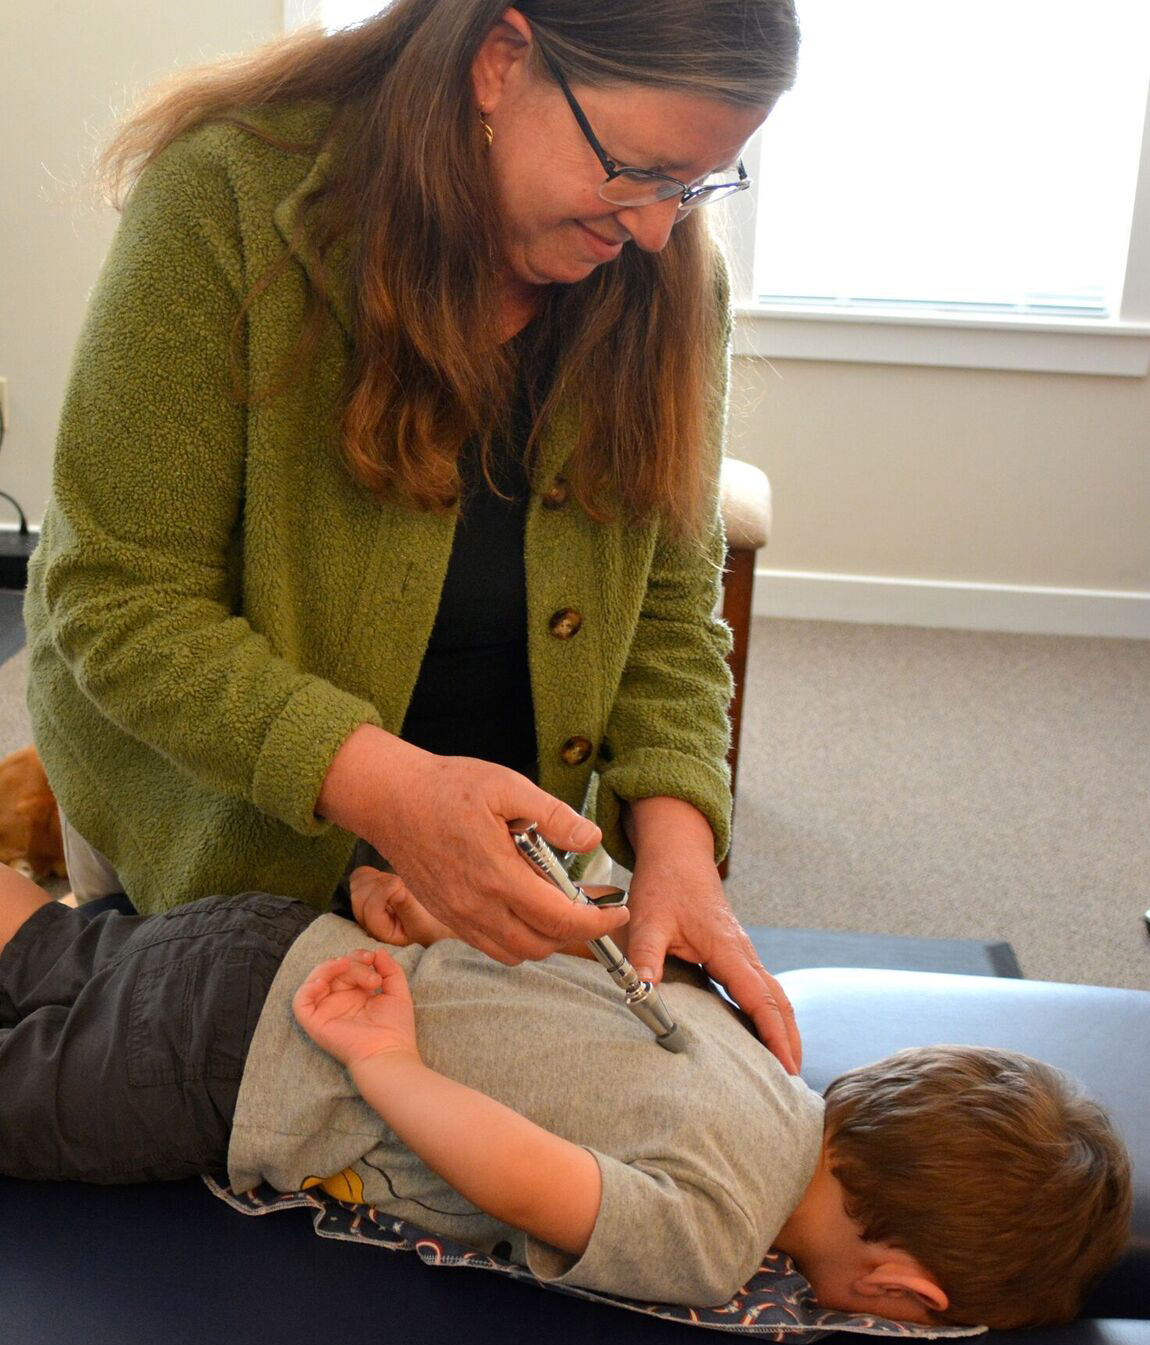 The Chiropractic Adjustment